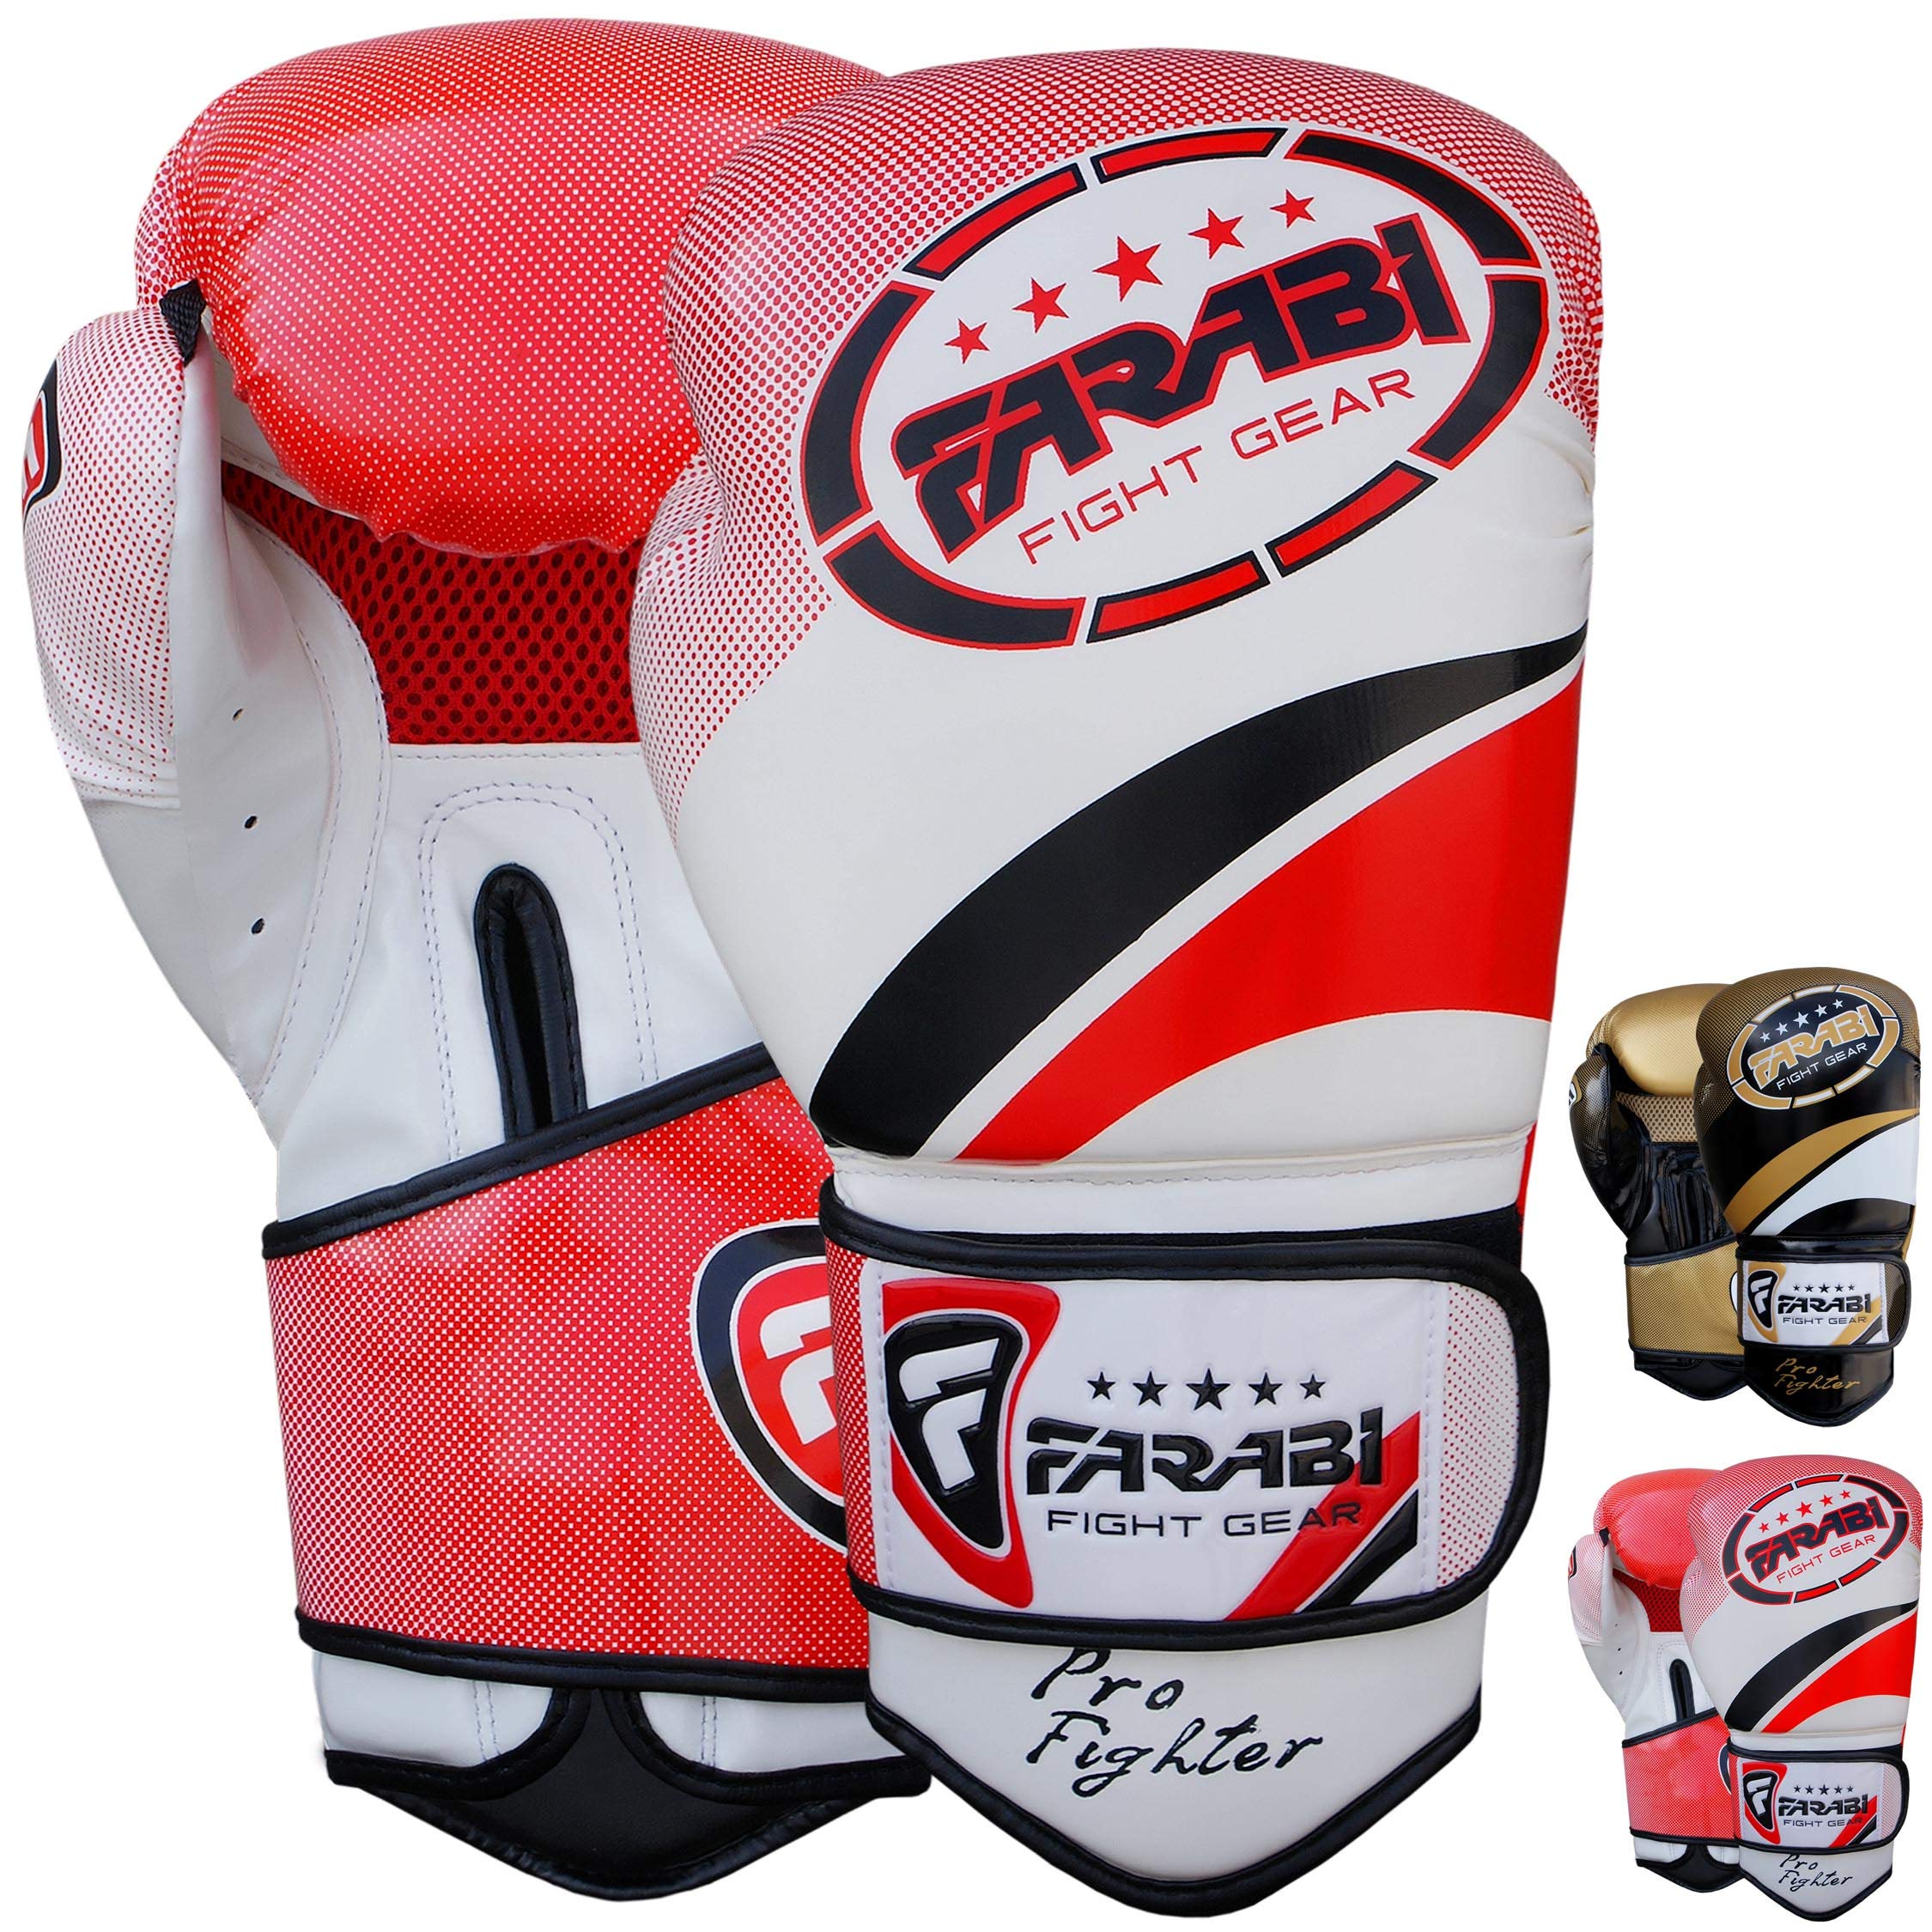 Farabi Sports Boxhandschuhe 10 oz, 12 oz, 14 oz, 16 oz Box Handschuhe für Training, Sparring, Kickboxen, MMA, Muay Thai, Boxhandschuhe männer & Damen Kampf Handschuhe (Red, 12-oz)